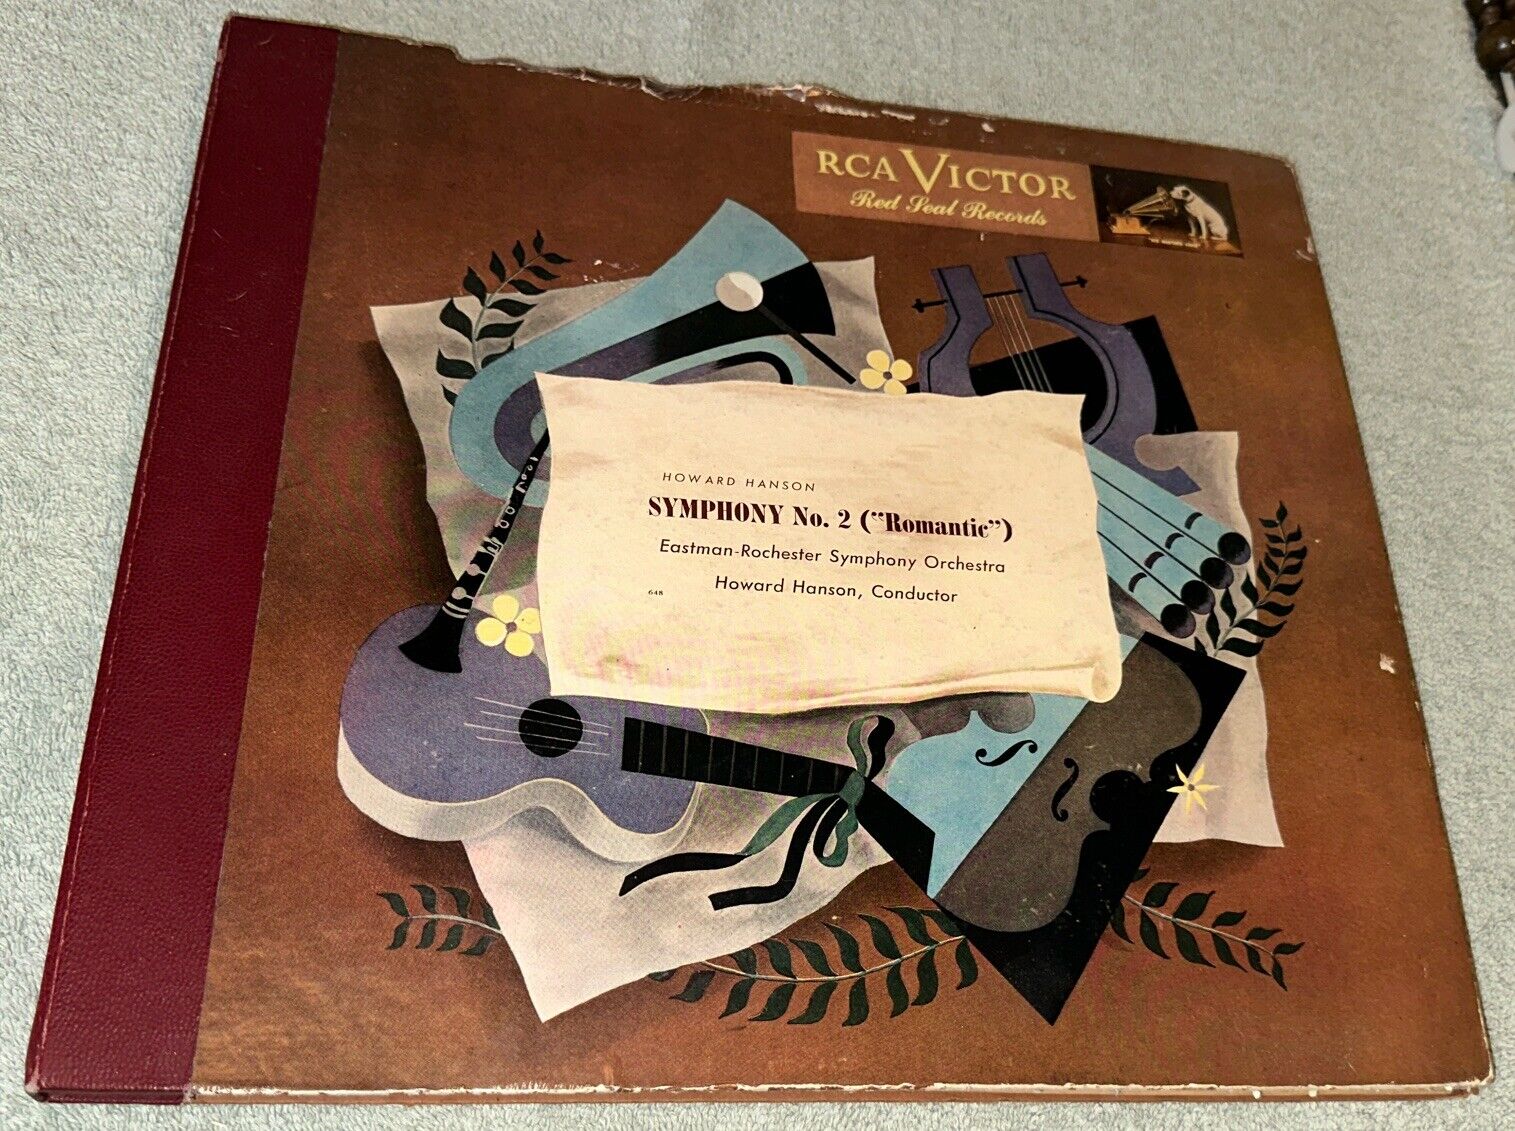 Vtg RCA Victor Red Seal Records Set Of 4 Symphony No. 2 “Romantic” Howard Hanson